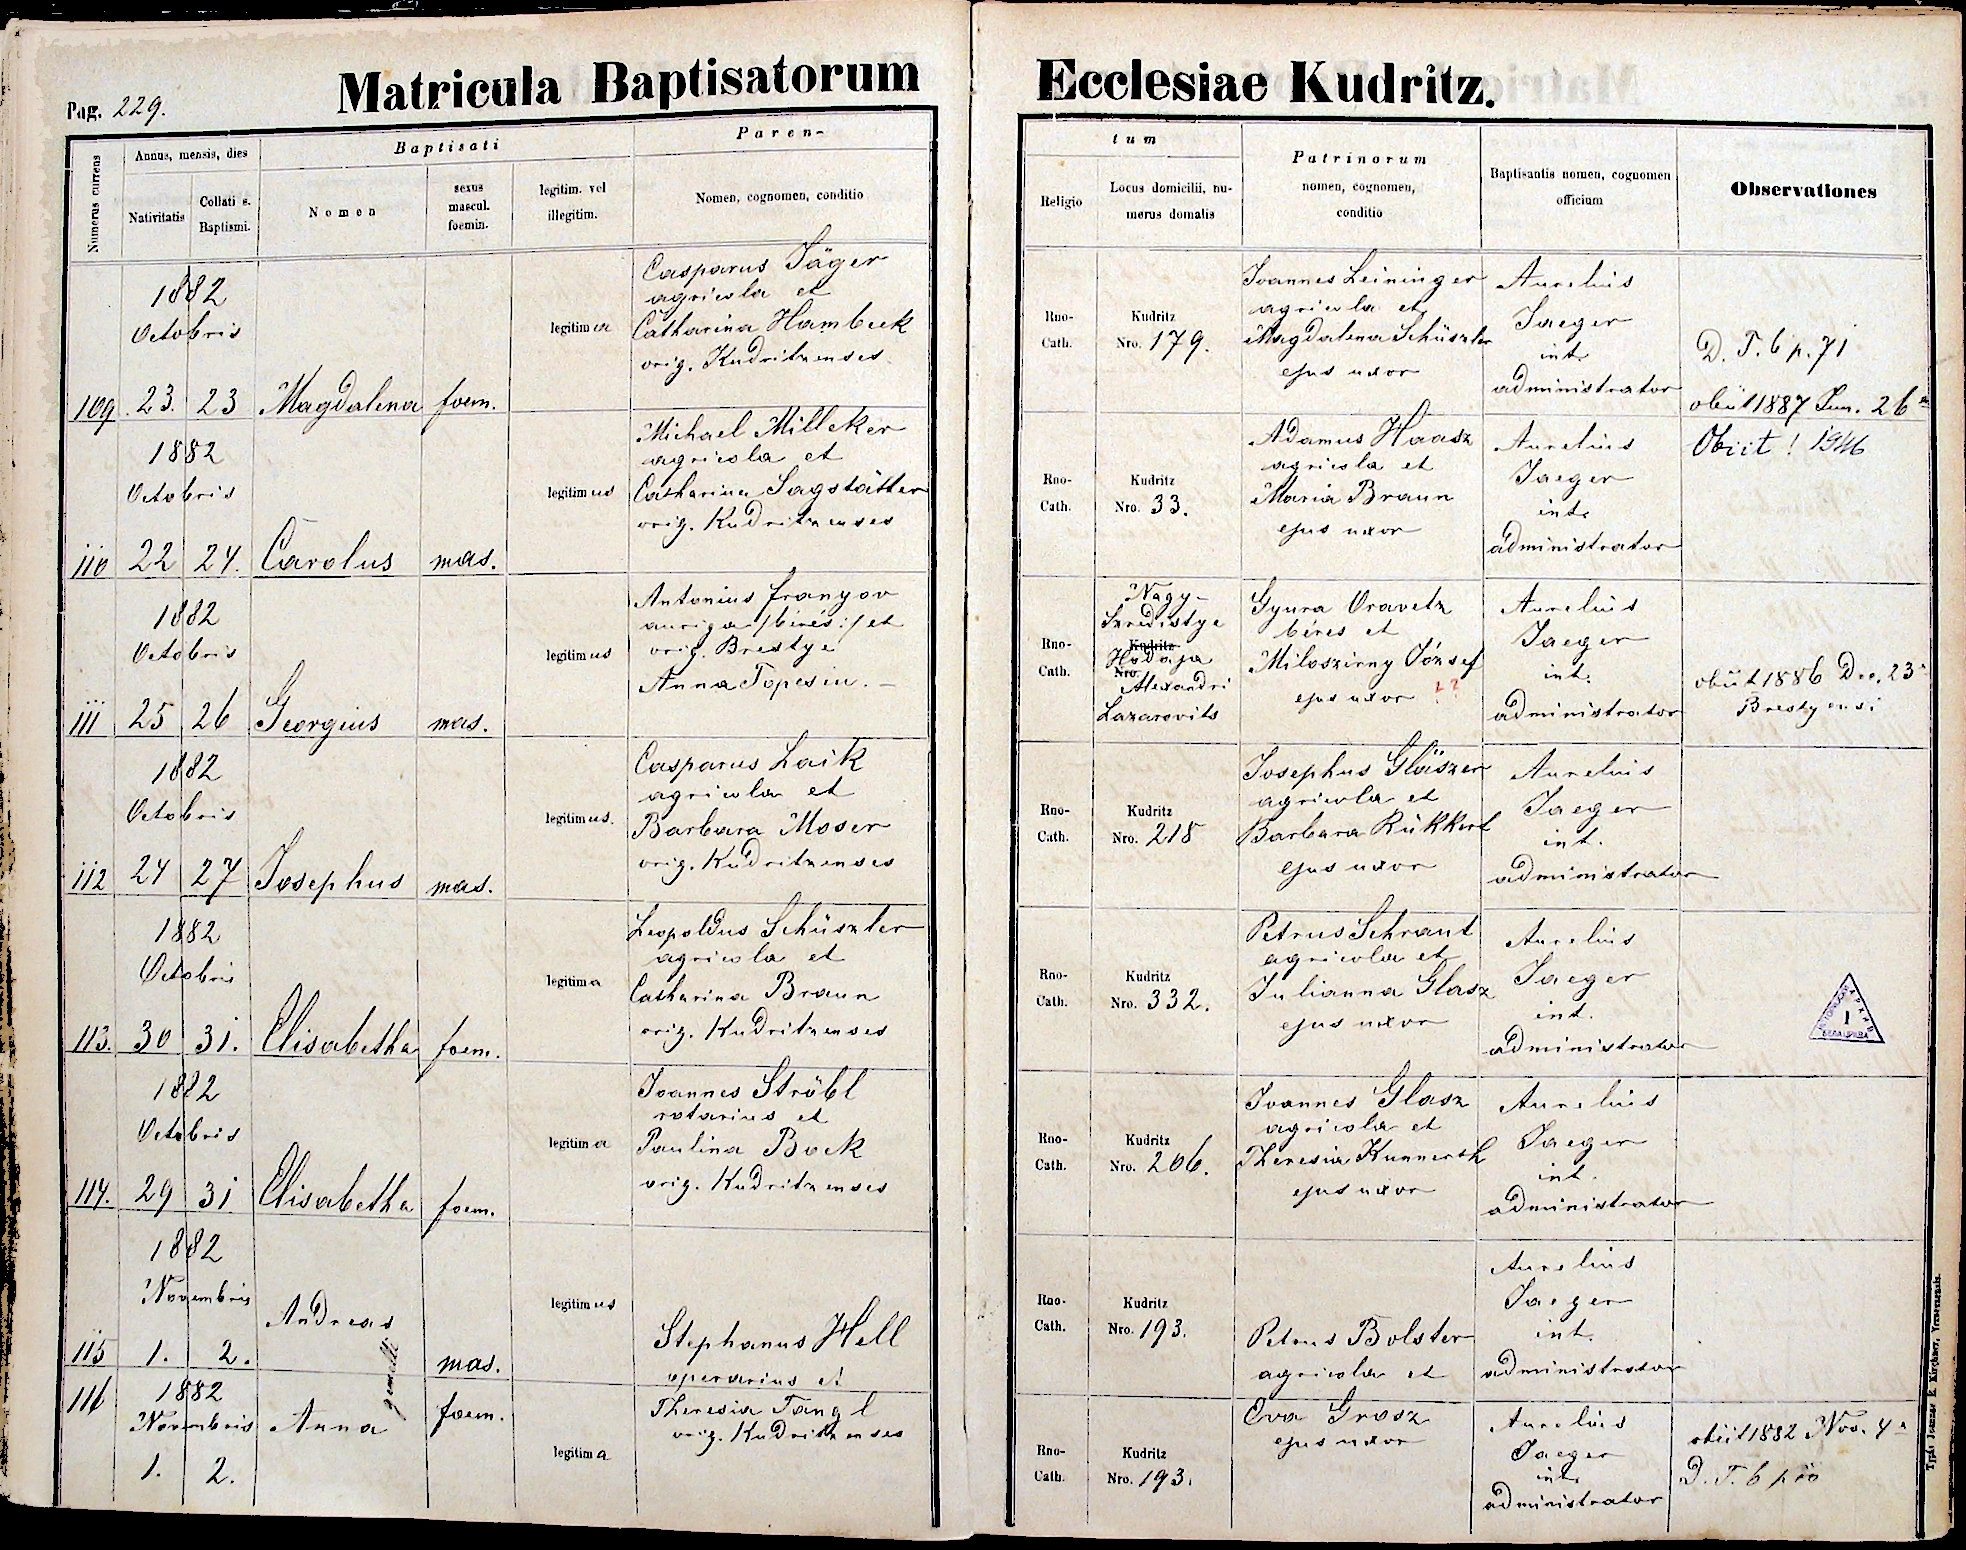 images/church_records/BIRTHS/1880-1883B/1882/229